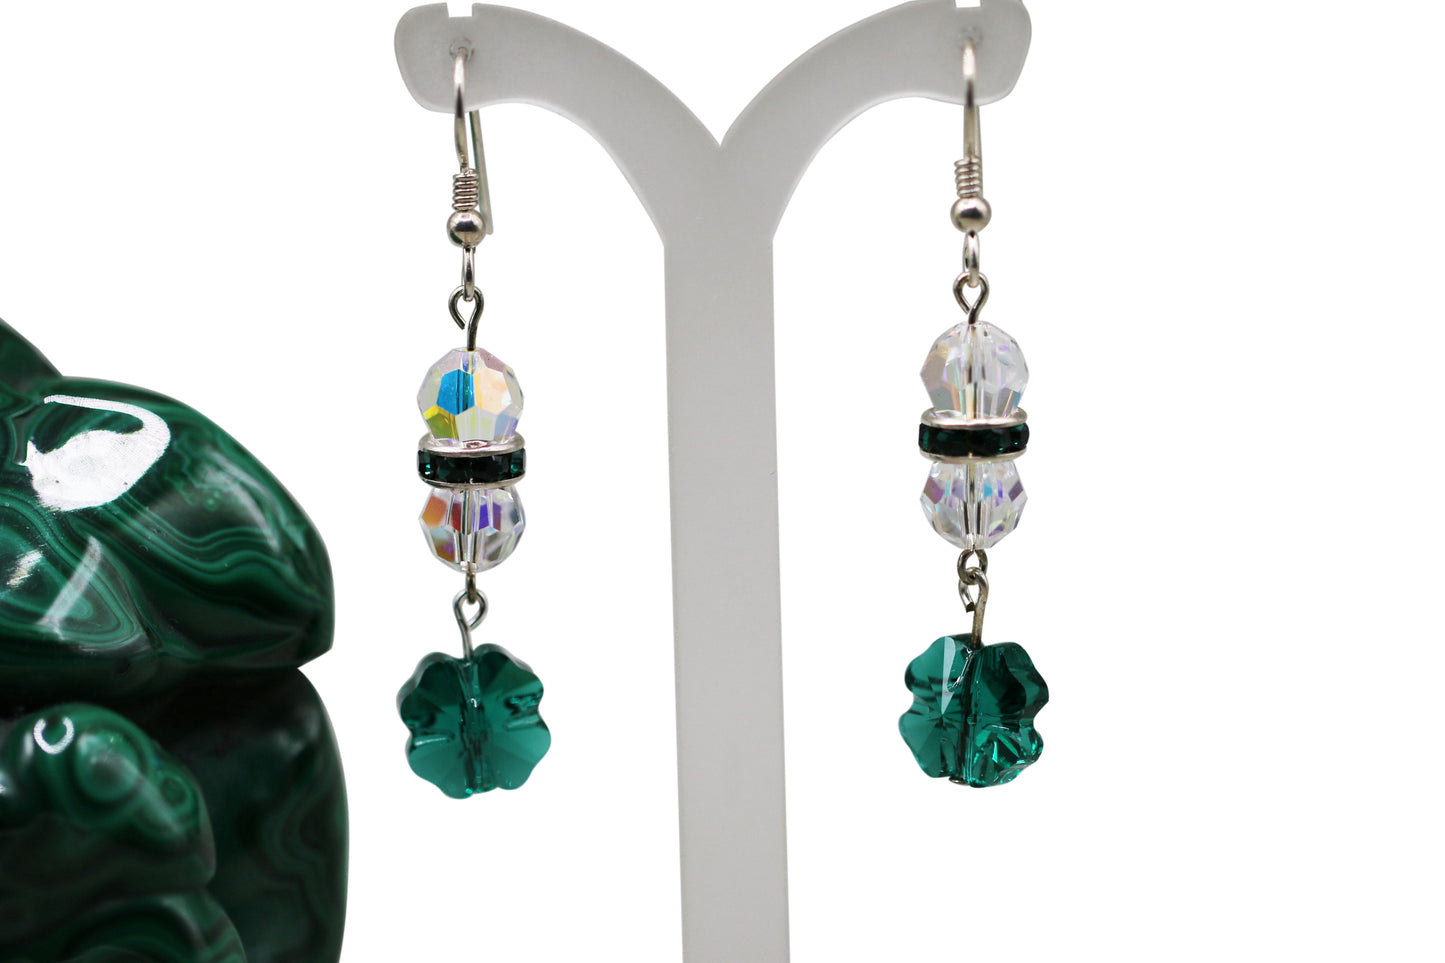 Shamrock Emerald Crystals Earrings